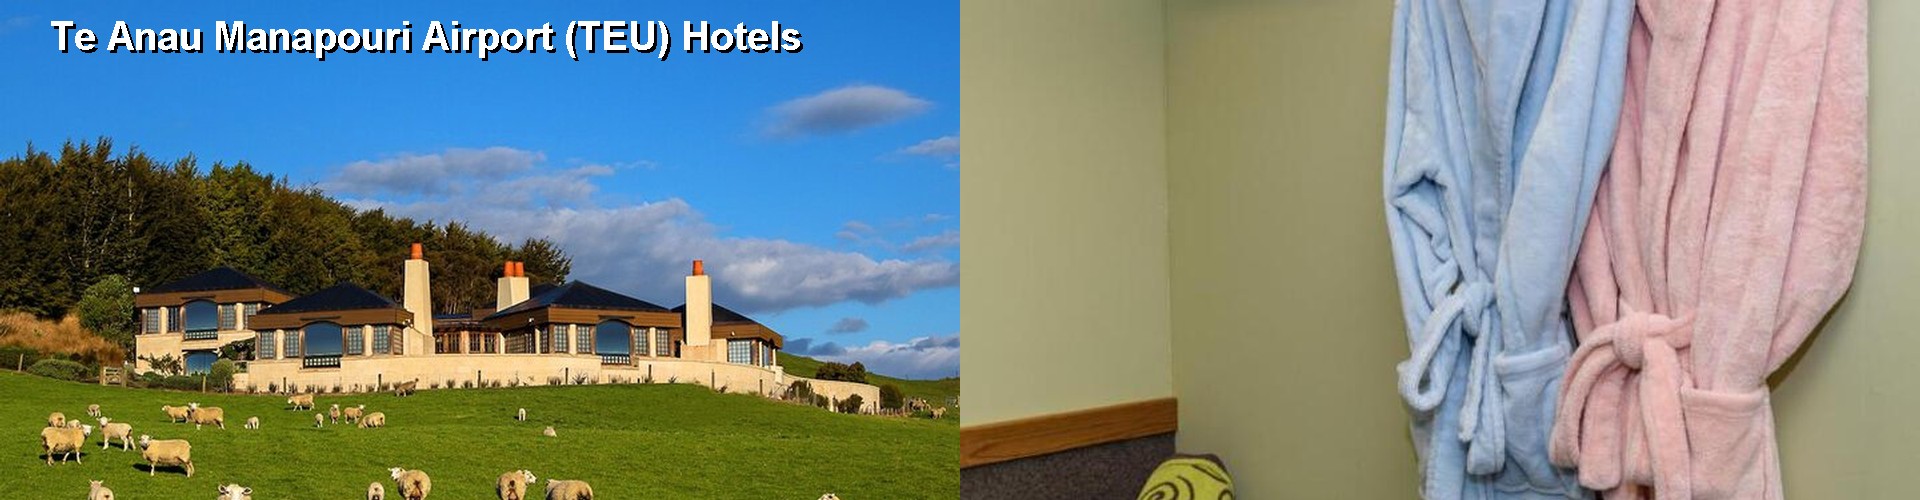 5 Best Hotels near Te Anau Manapouri Airport (TEU)